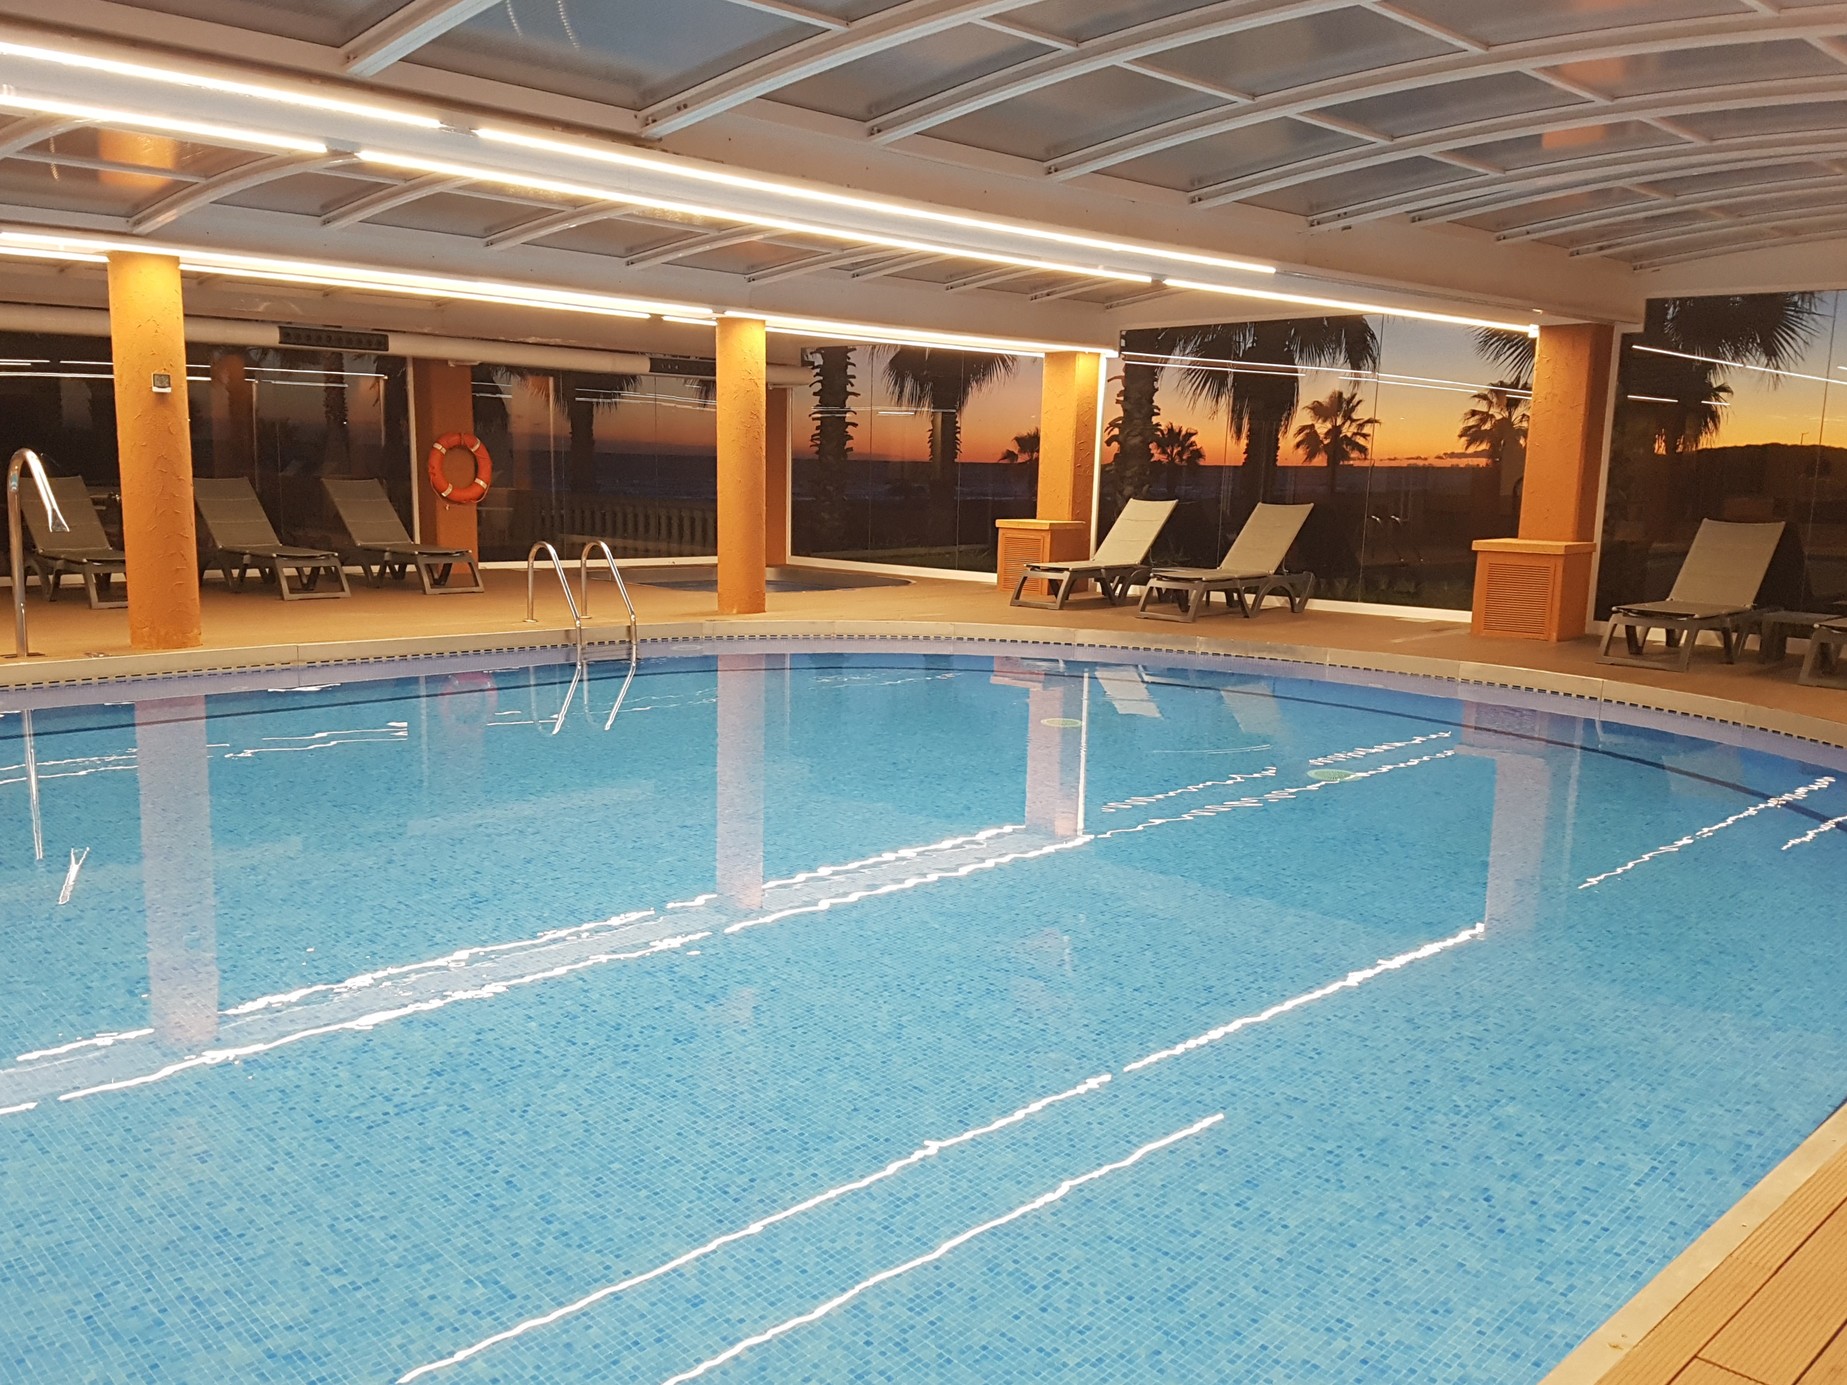 Pool internal